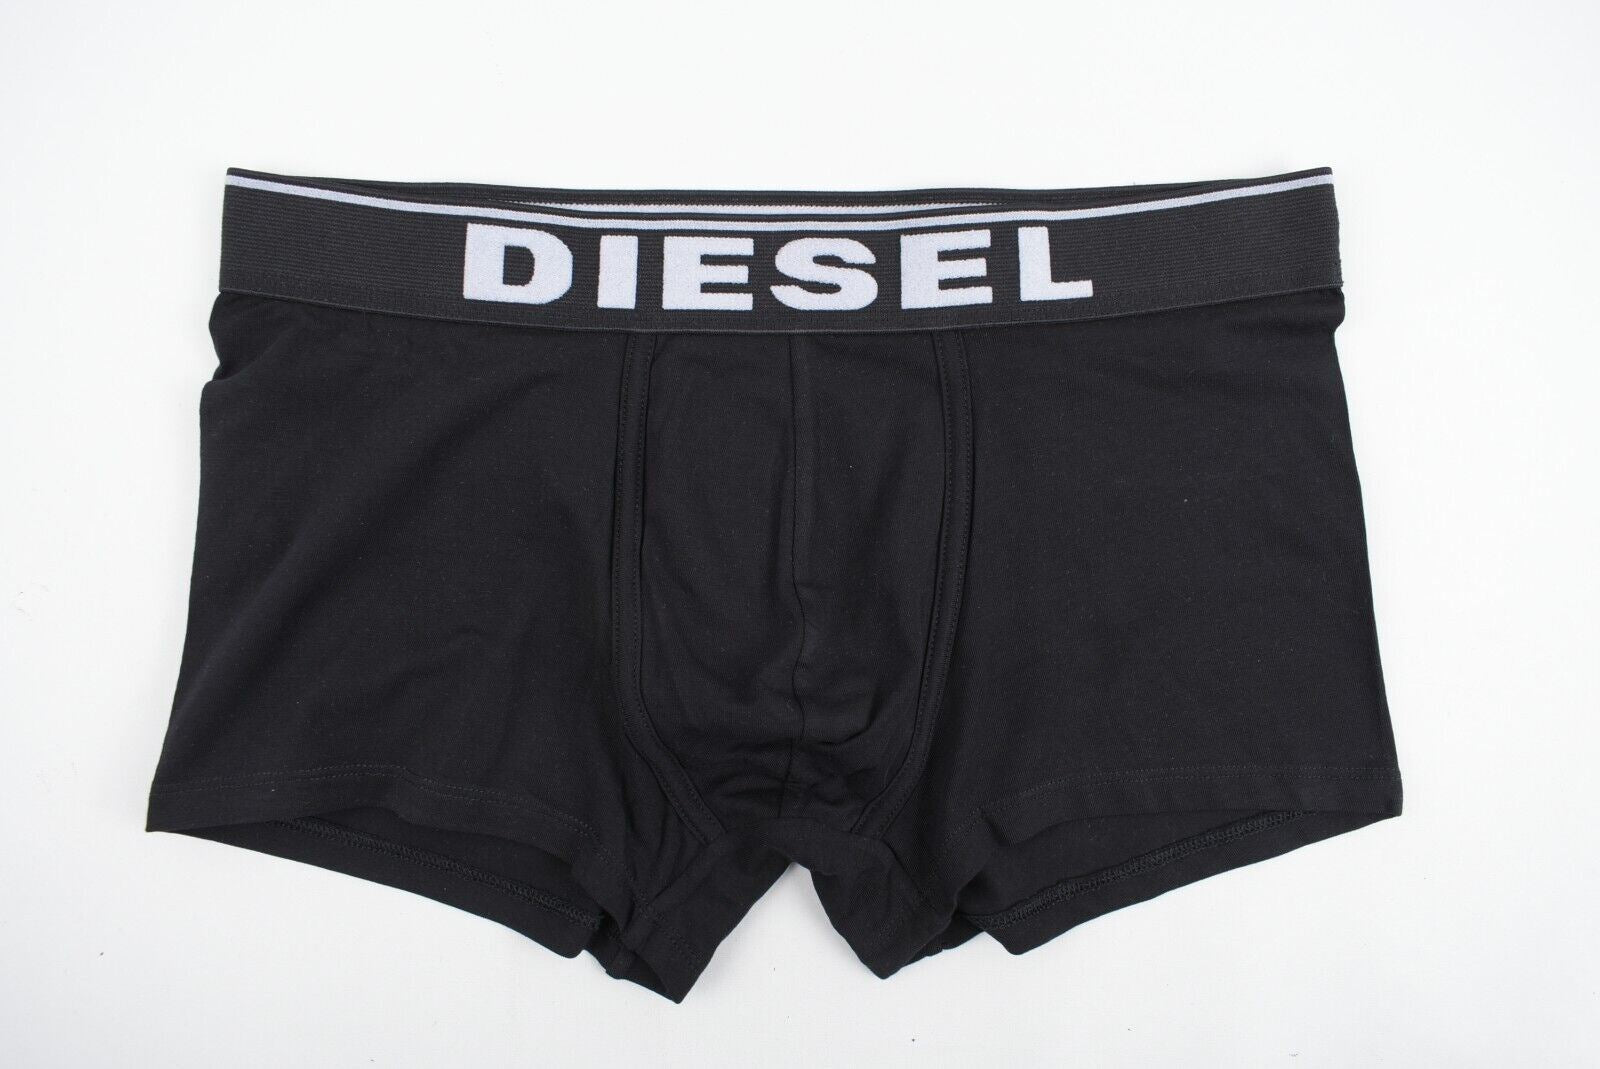 DIESEL Underwear: Men's DAMIEN 3-pk Boxer Trunks, Black/White/Navy, size L